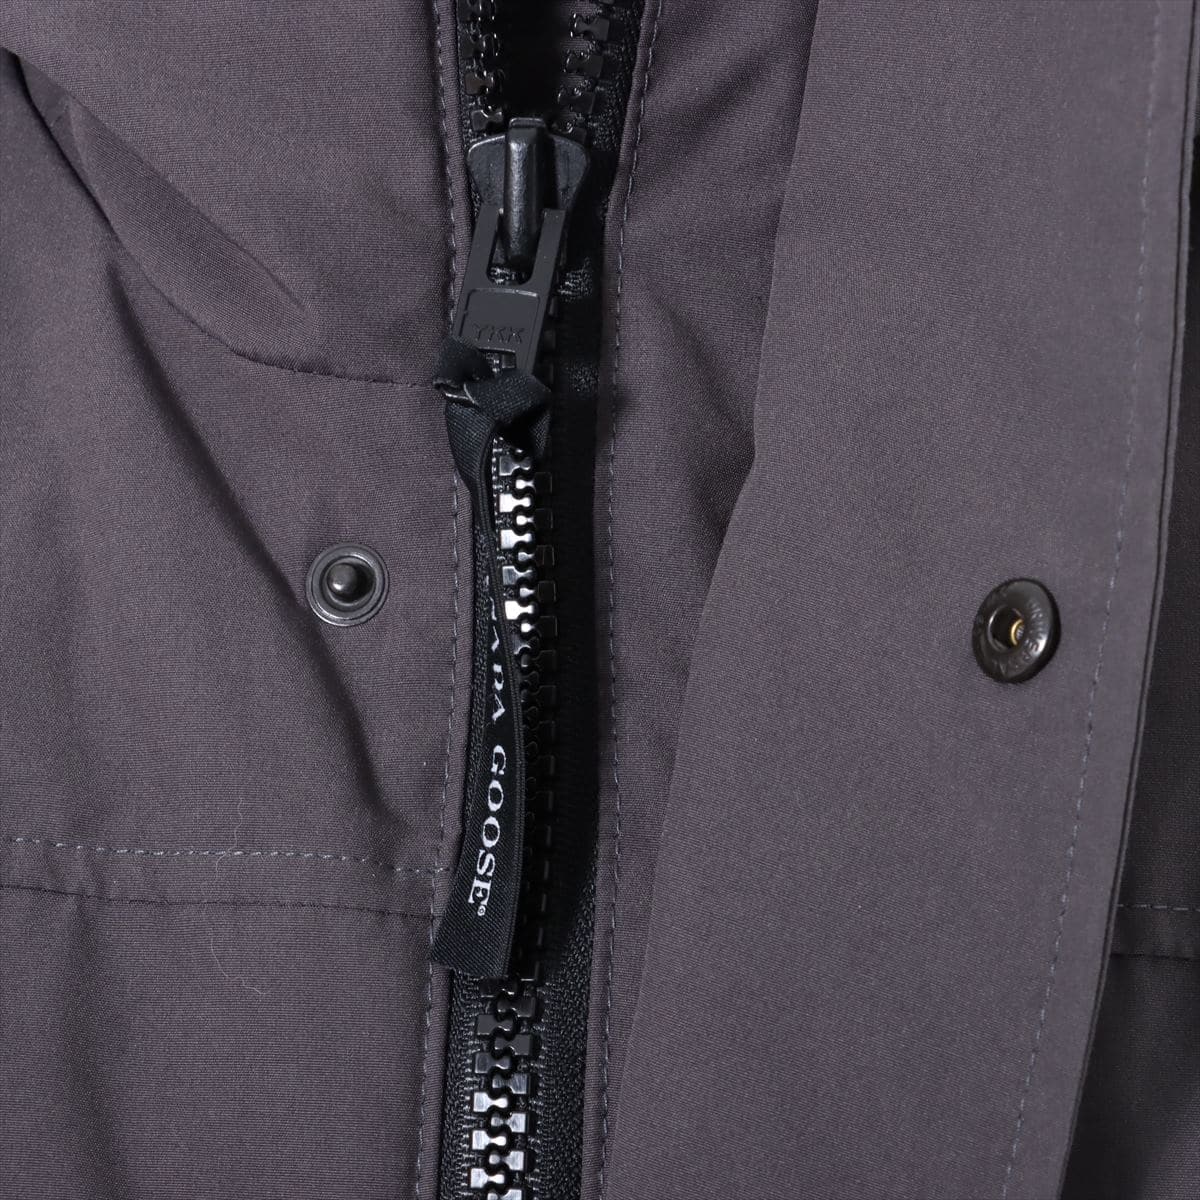 Canada Goose SANFORD Cotton & polyester Down jacket XS Men's Grey  3400M Sotheby